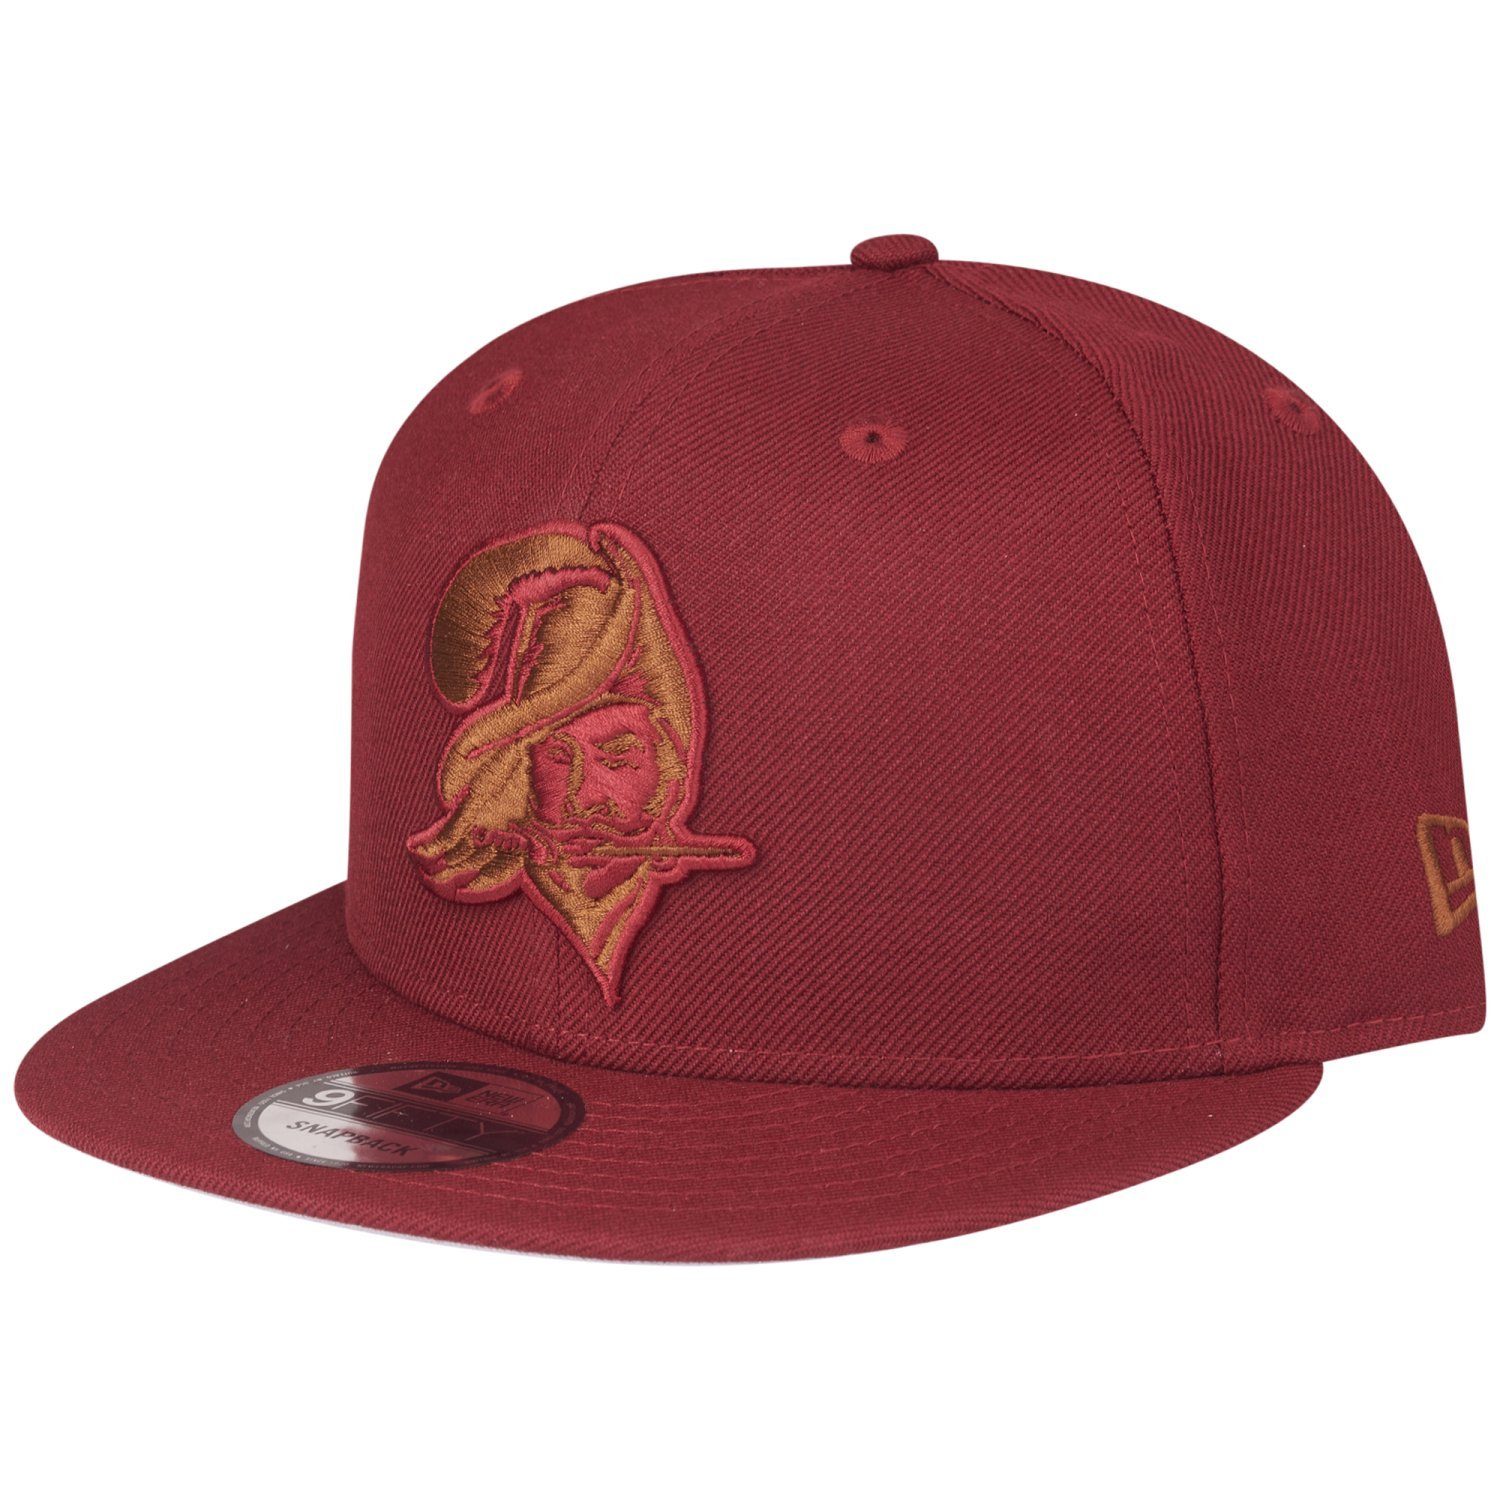 New Era Snapback Cap 9Fifty Tampa Bay Buccaneers cardinal